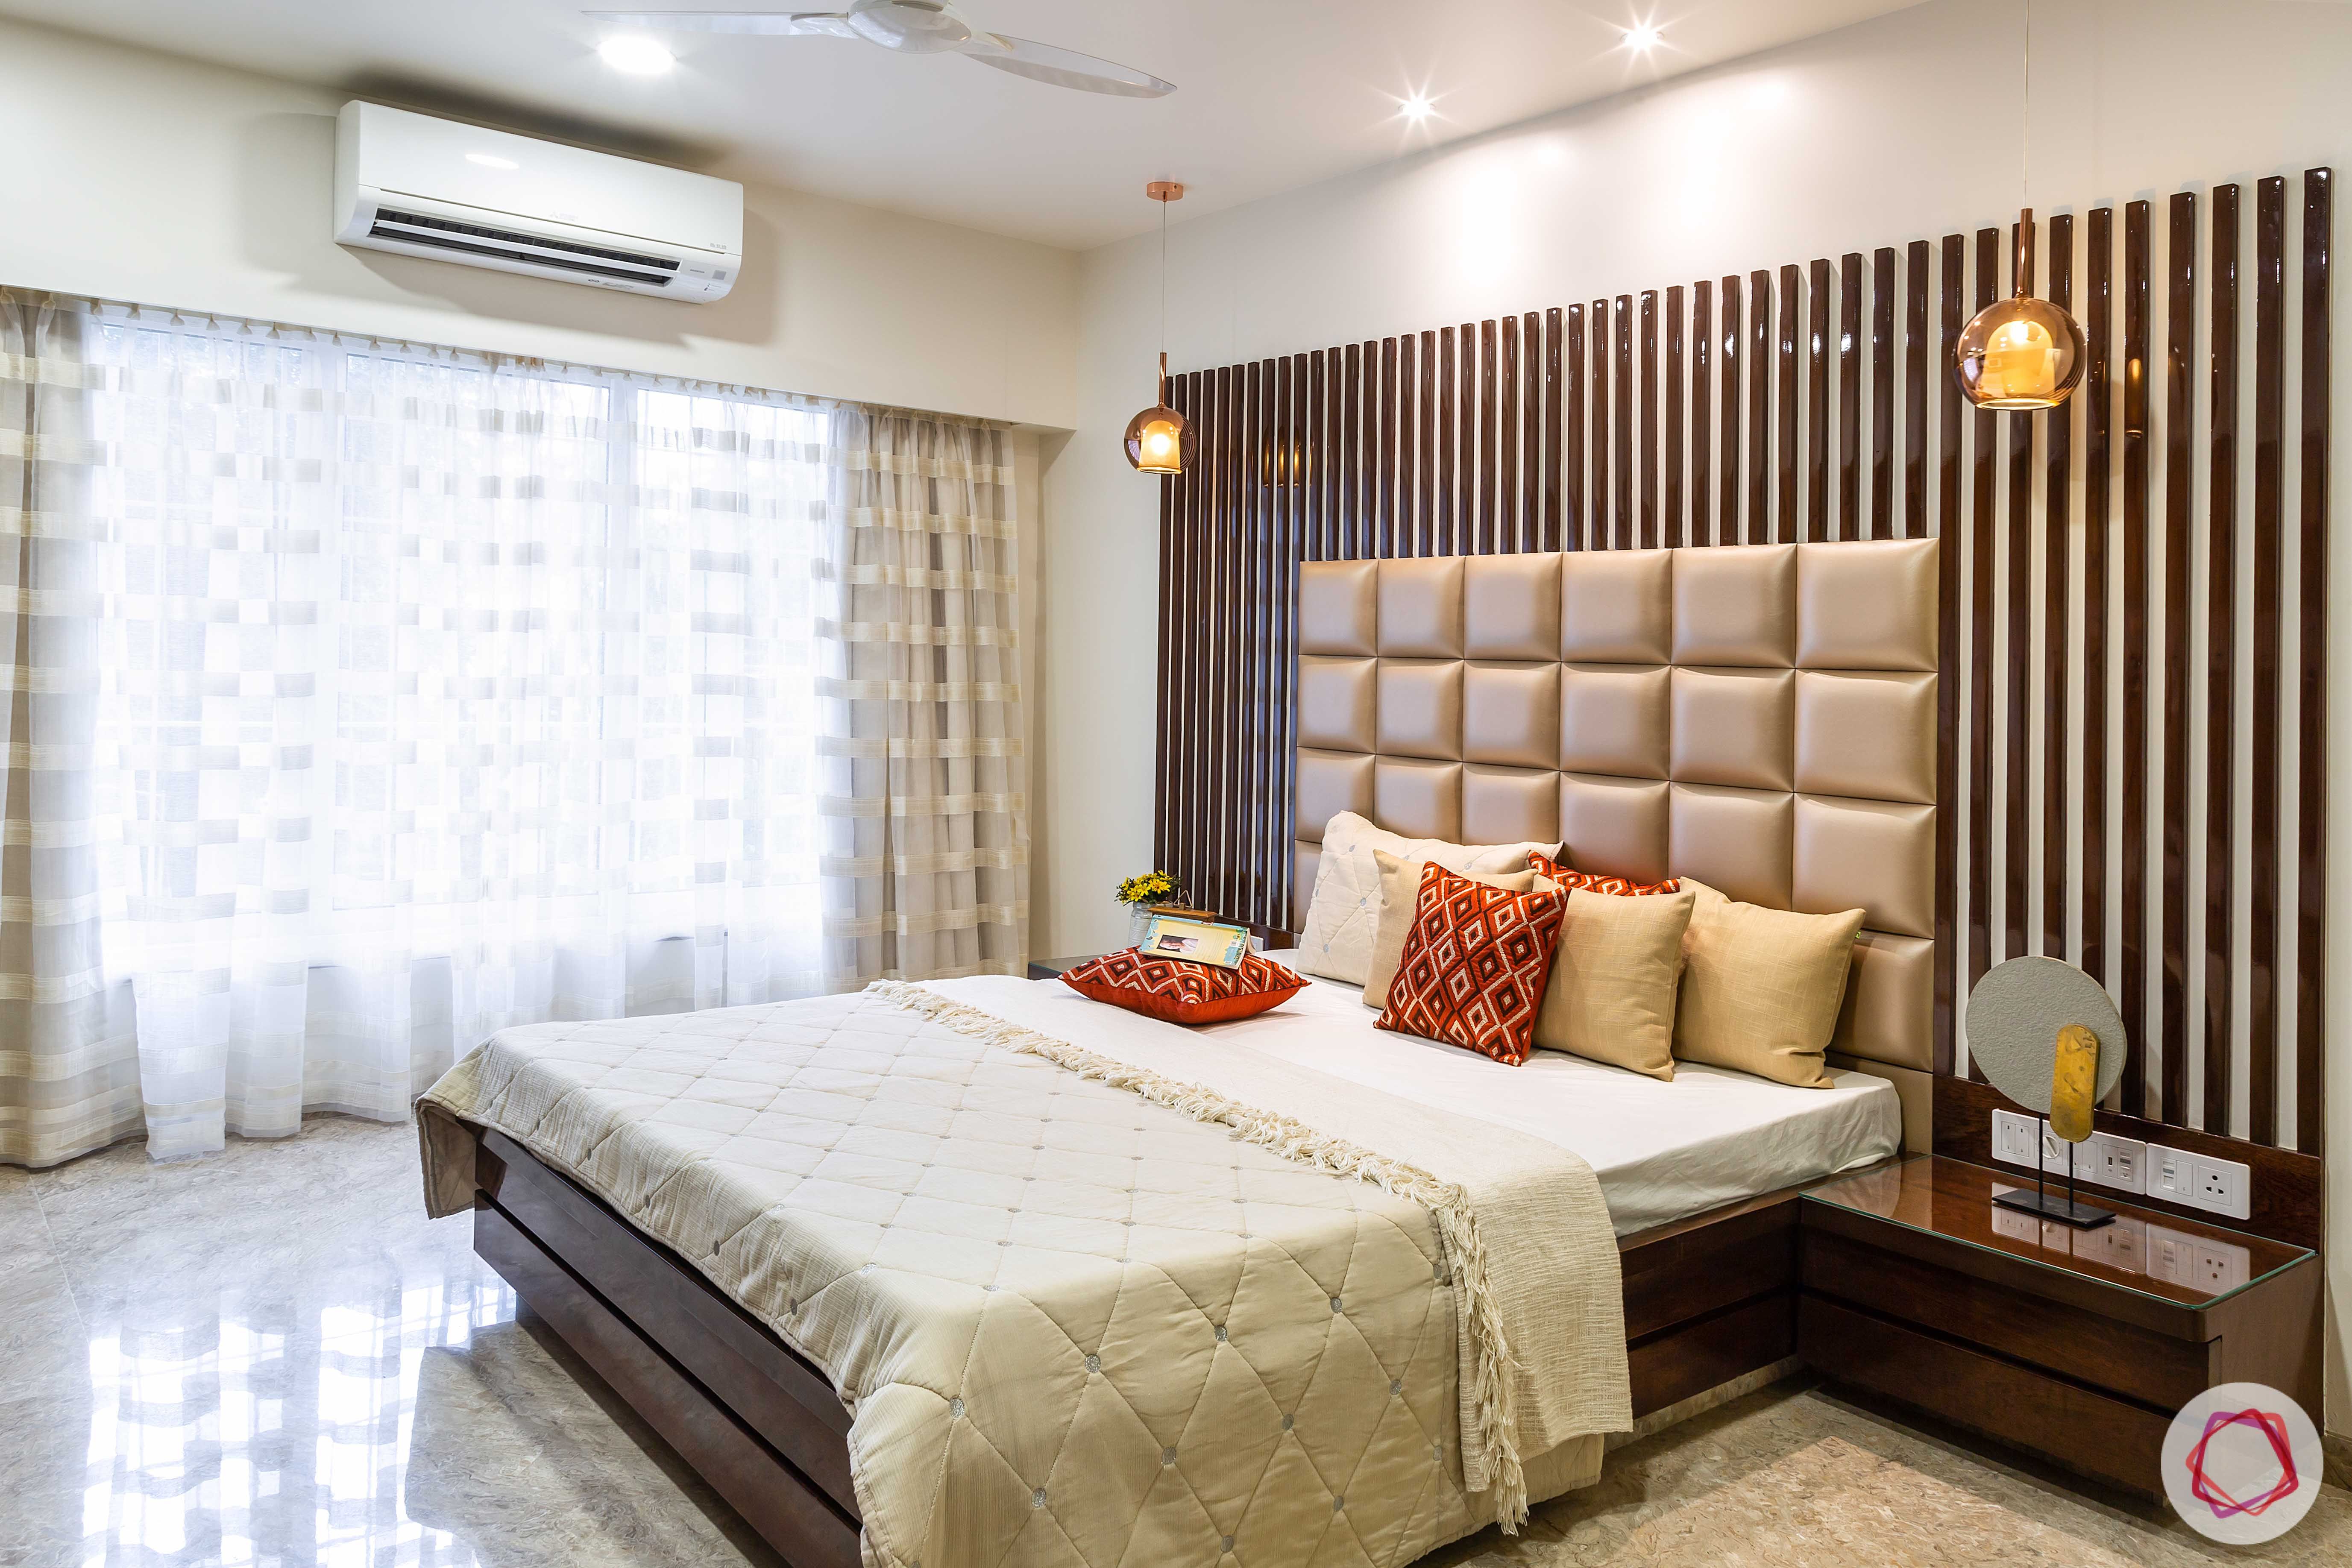 Modern Bedroom Designs For Your Next Home Renovation